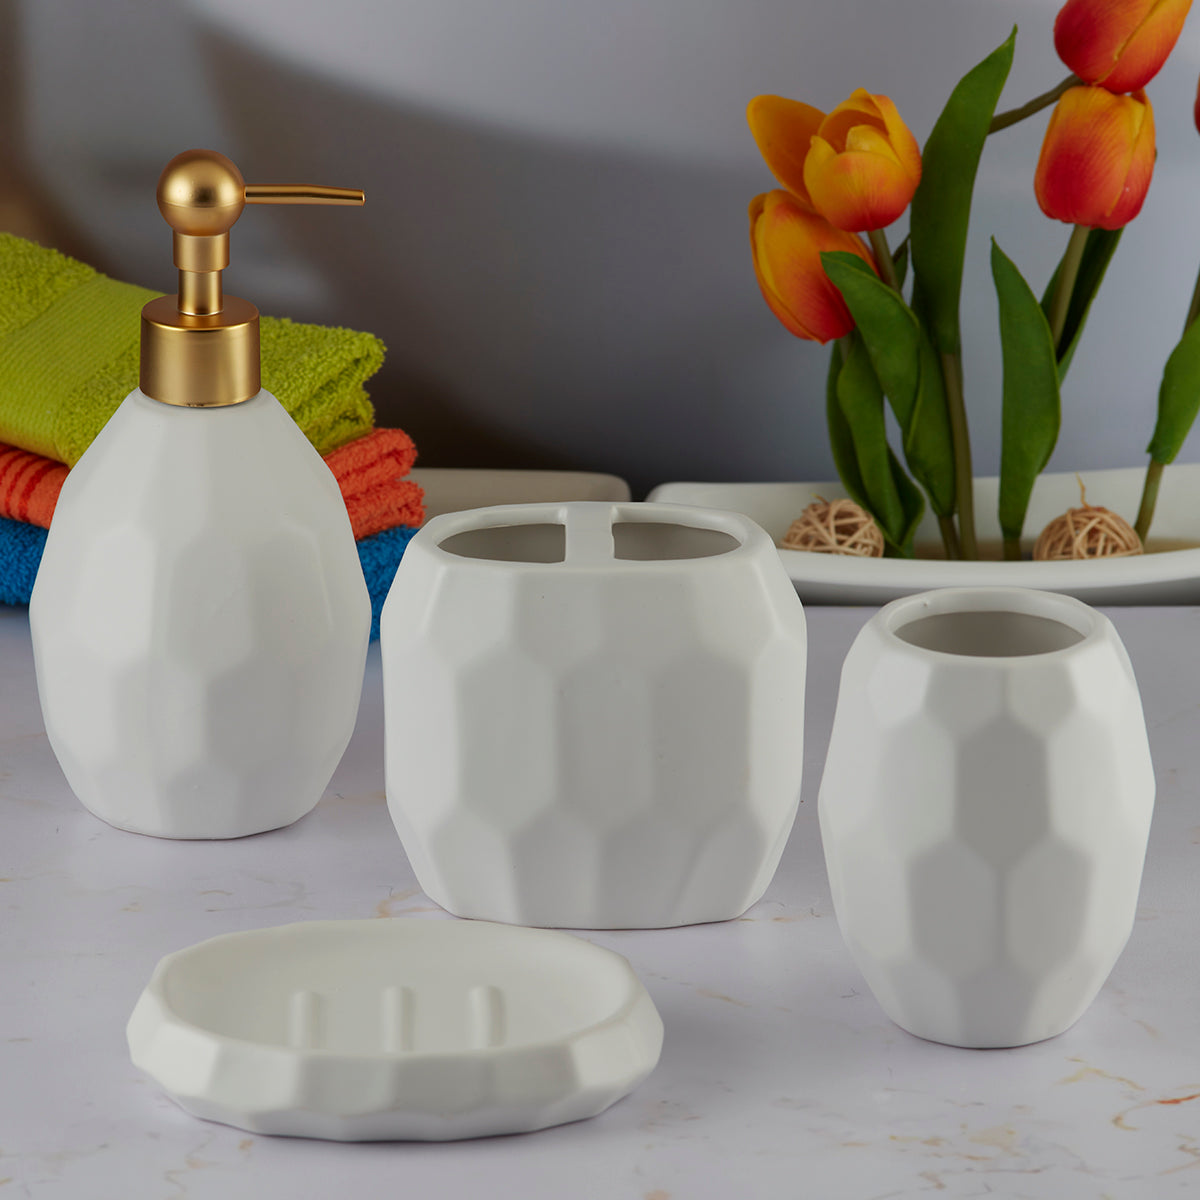 Ceramic Bathroom Accessories Set of 4 Bath Set with Soap Dispenser (5760)